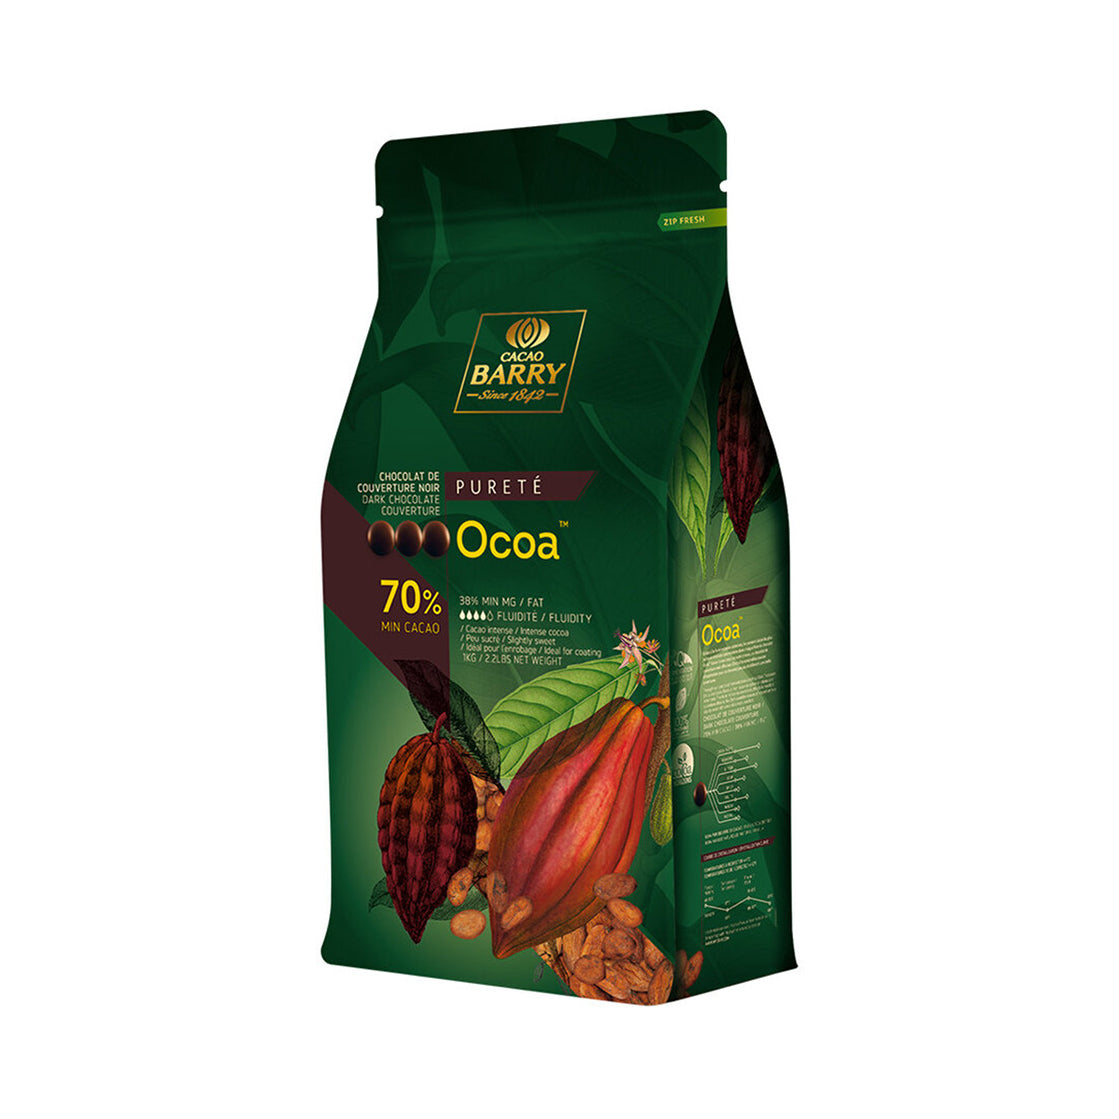 CACAO BARRY Ocoa 70%, Dark Chocolate Couverture